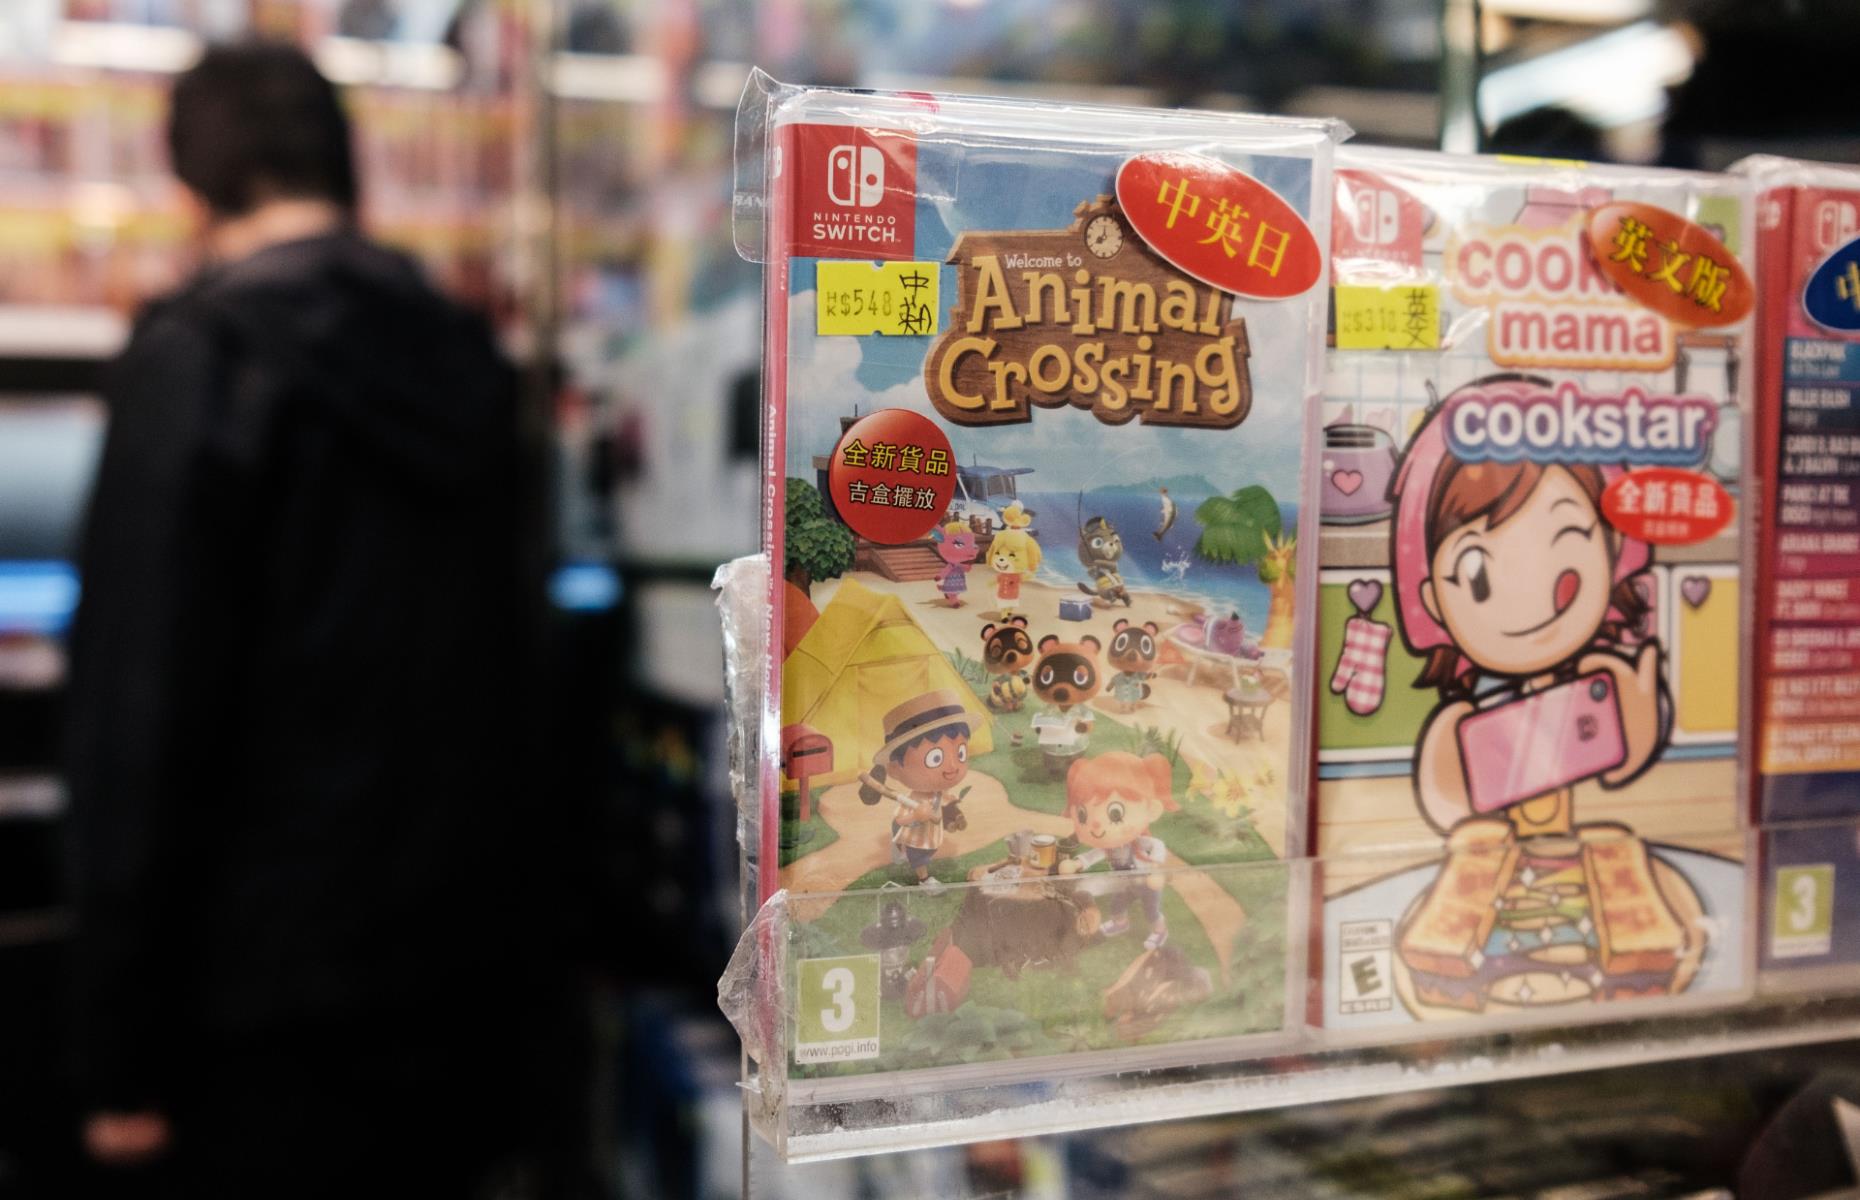 Global: Animal Crossing video game